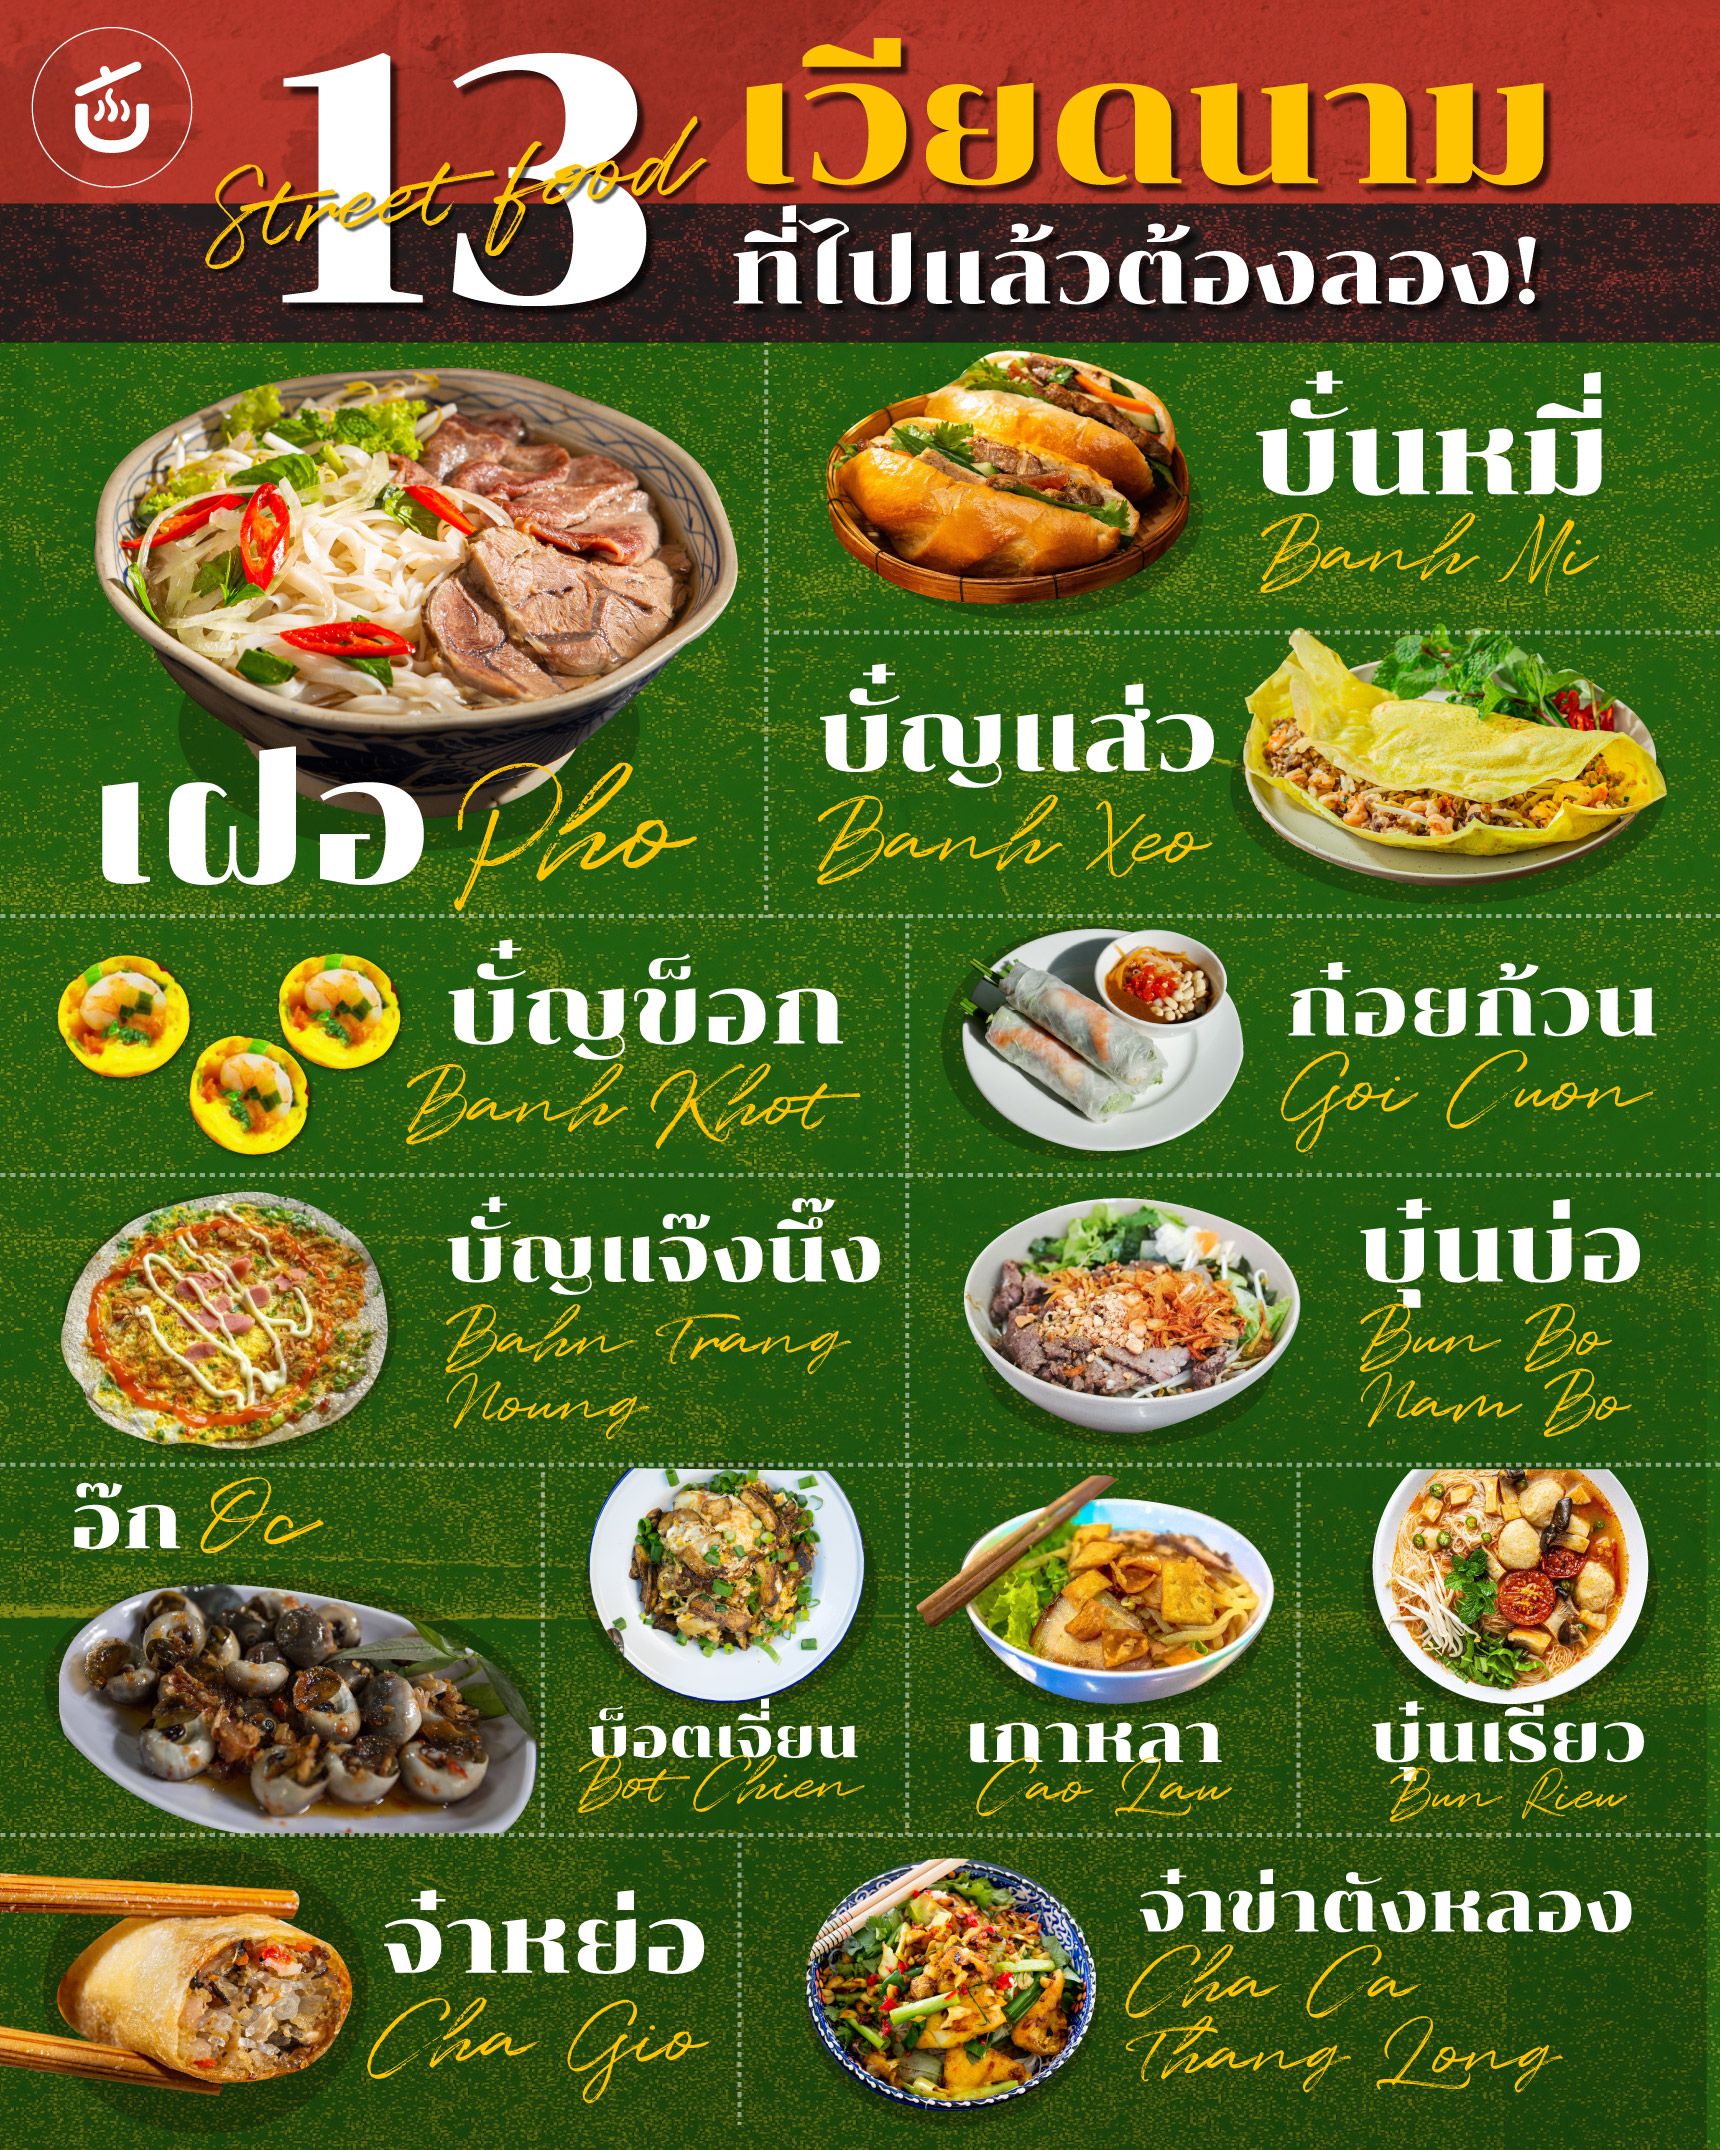 Vietnamese street foods